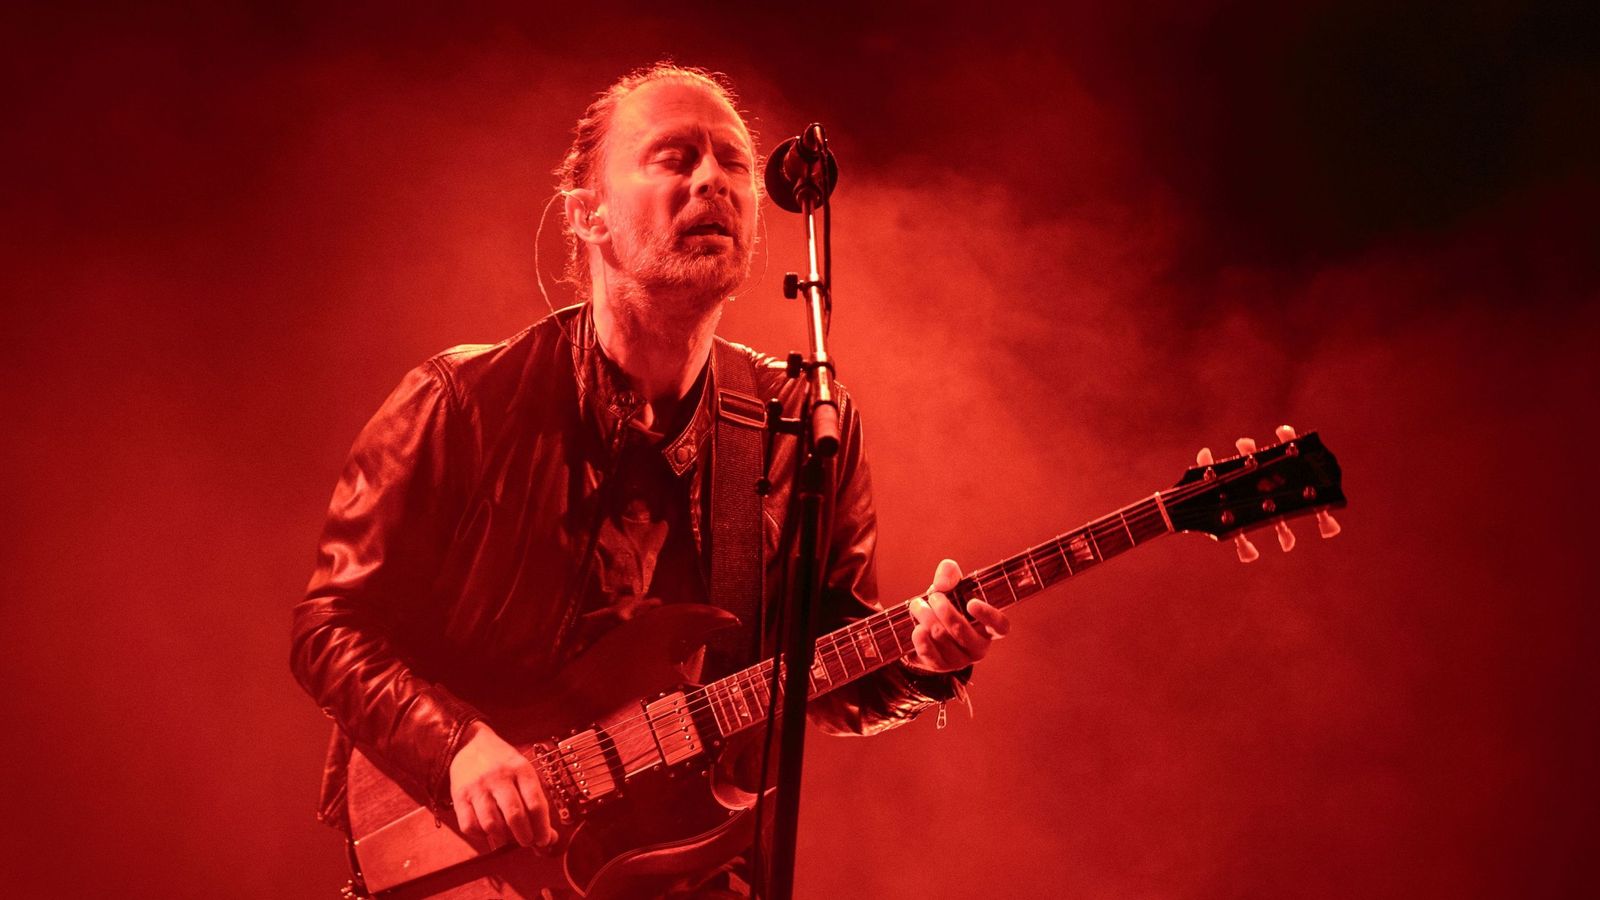 Radiohead will be headlining Glastonbury 2017 | Ents & Arts News | Sky News